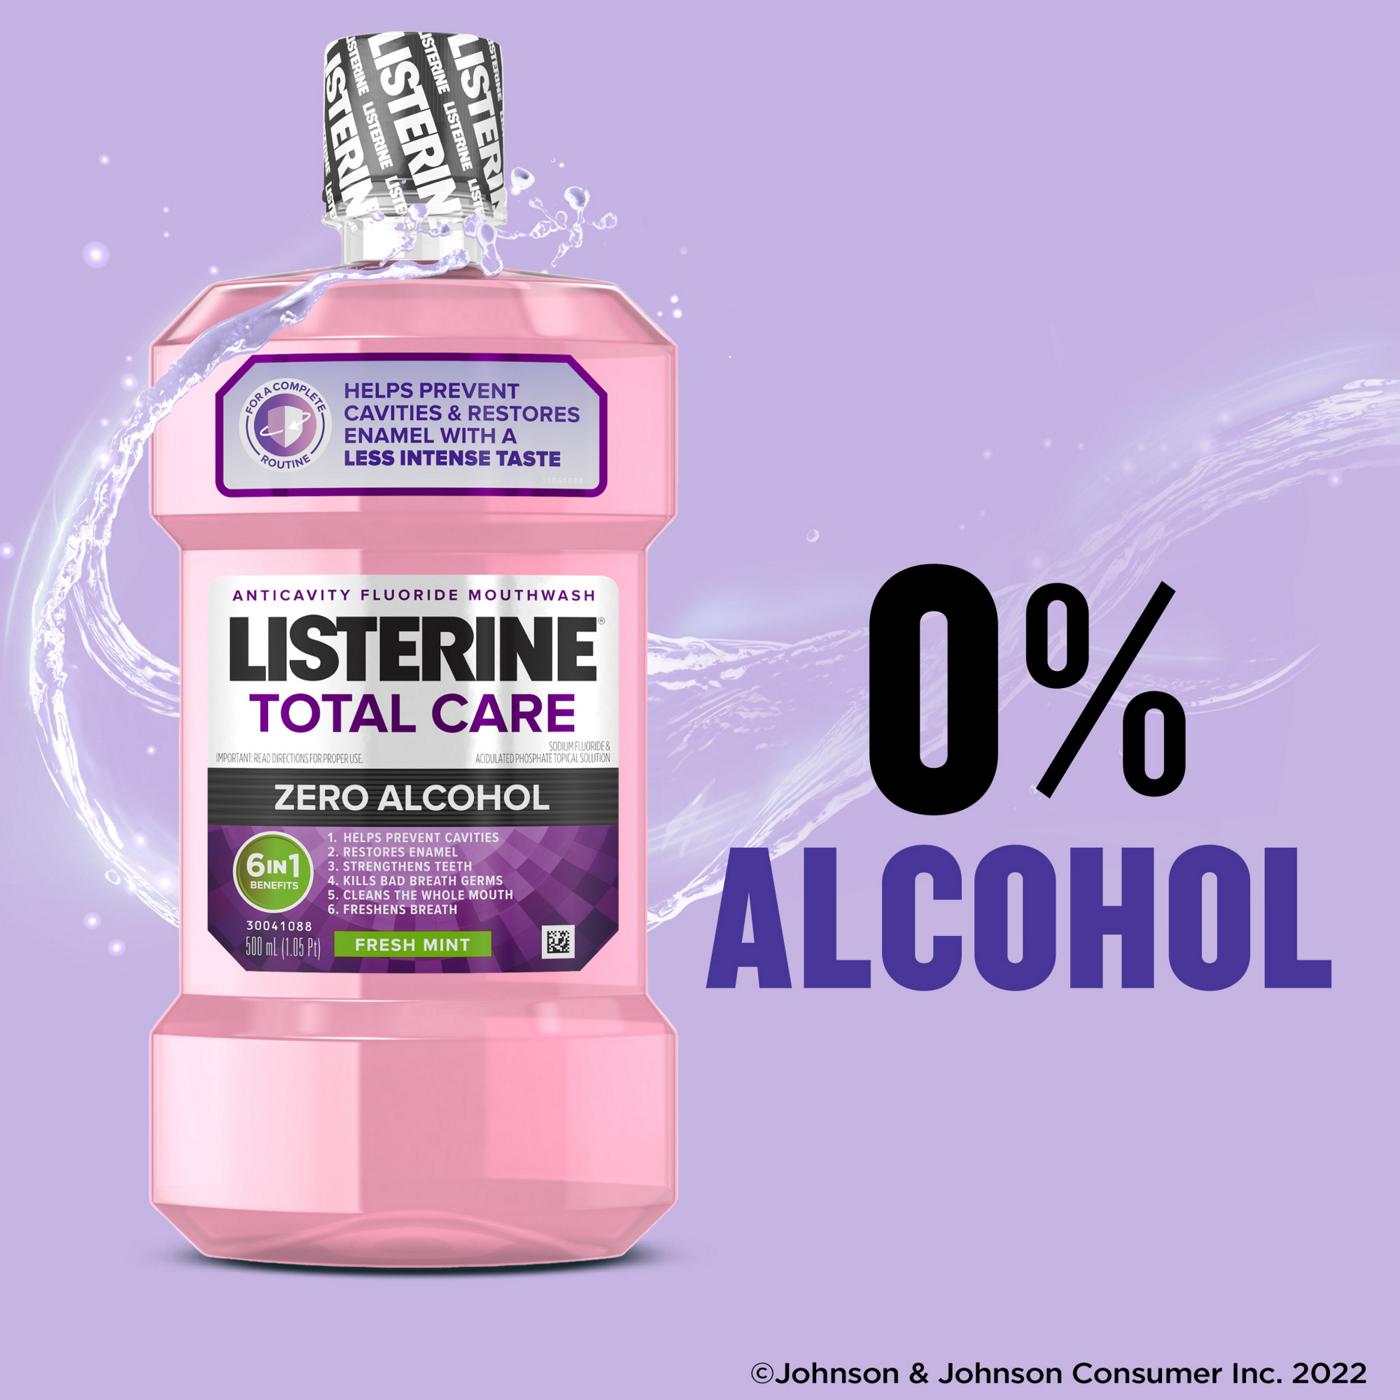 Listerine Total Care Zero Alcohol Anticavity Mouthwash - Fresh Mint; image 4 of 8